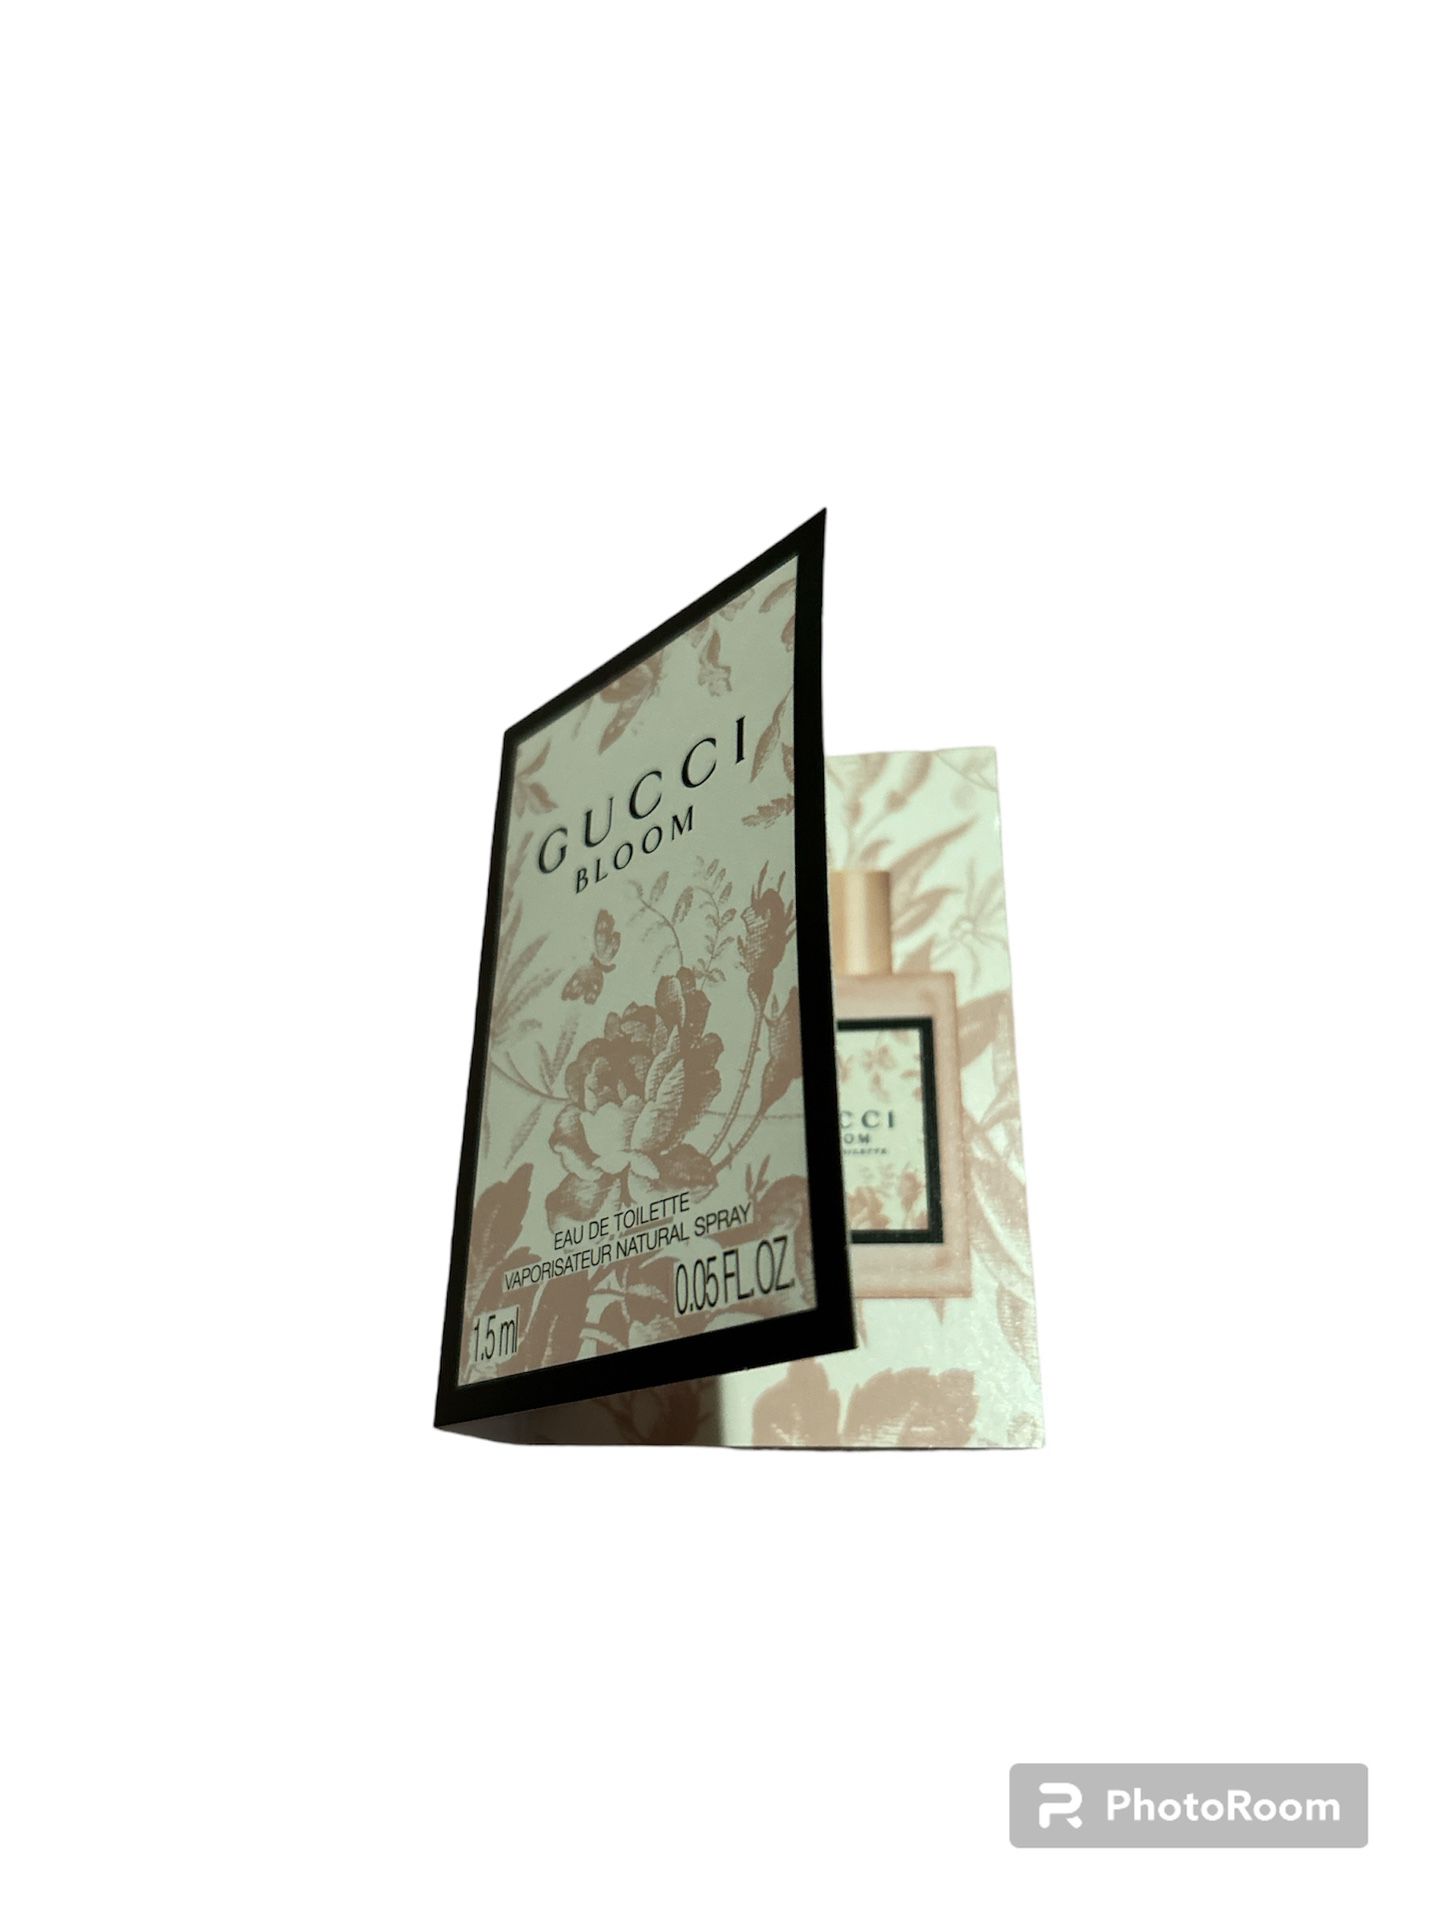 Gucci Bloom Eau de Parfum Edp 1.5mL Sample Fragrance Spray Vial New